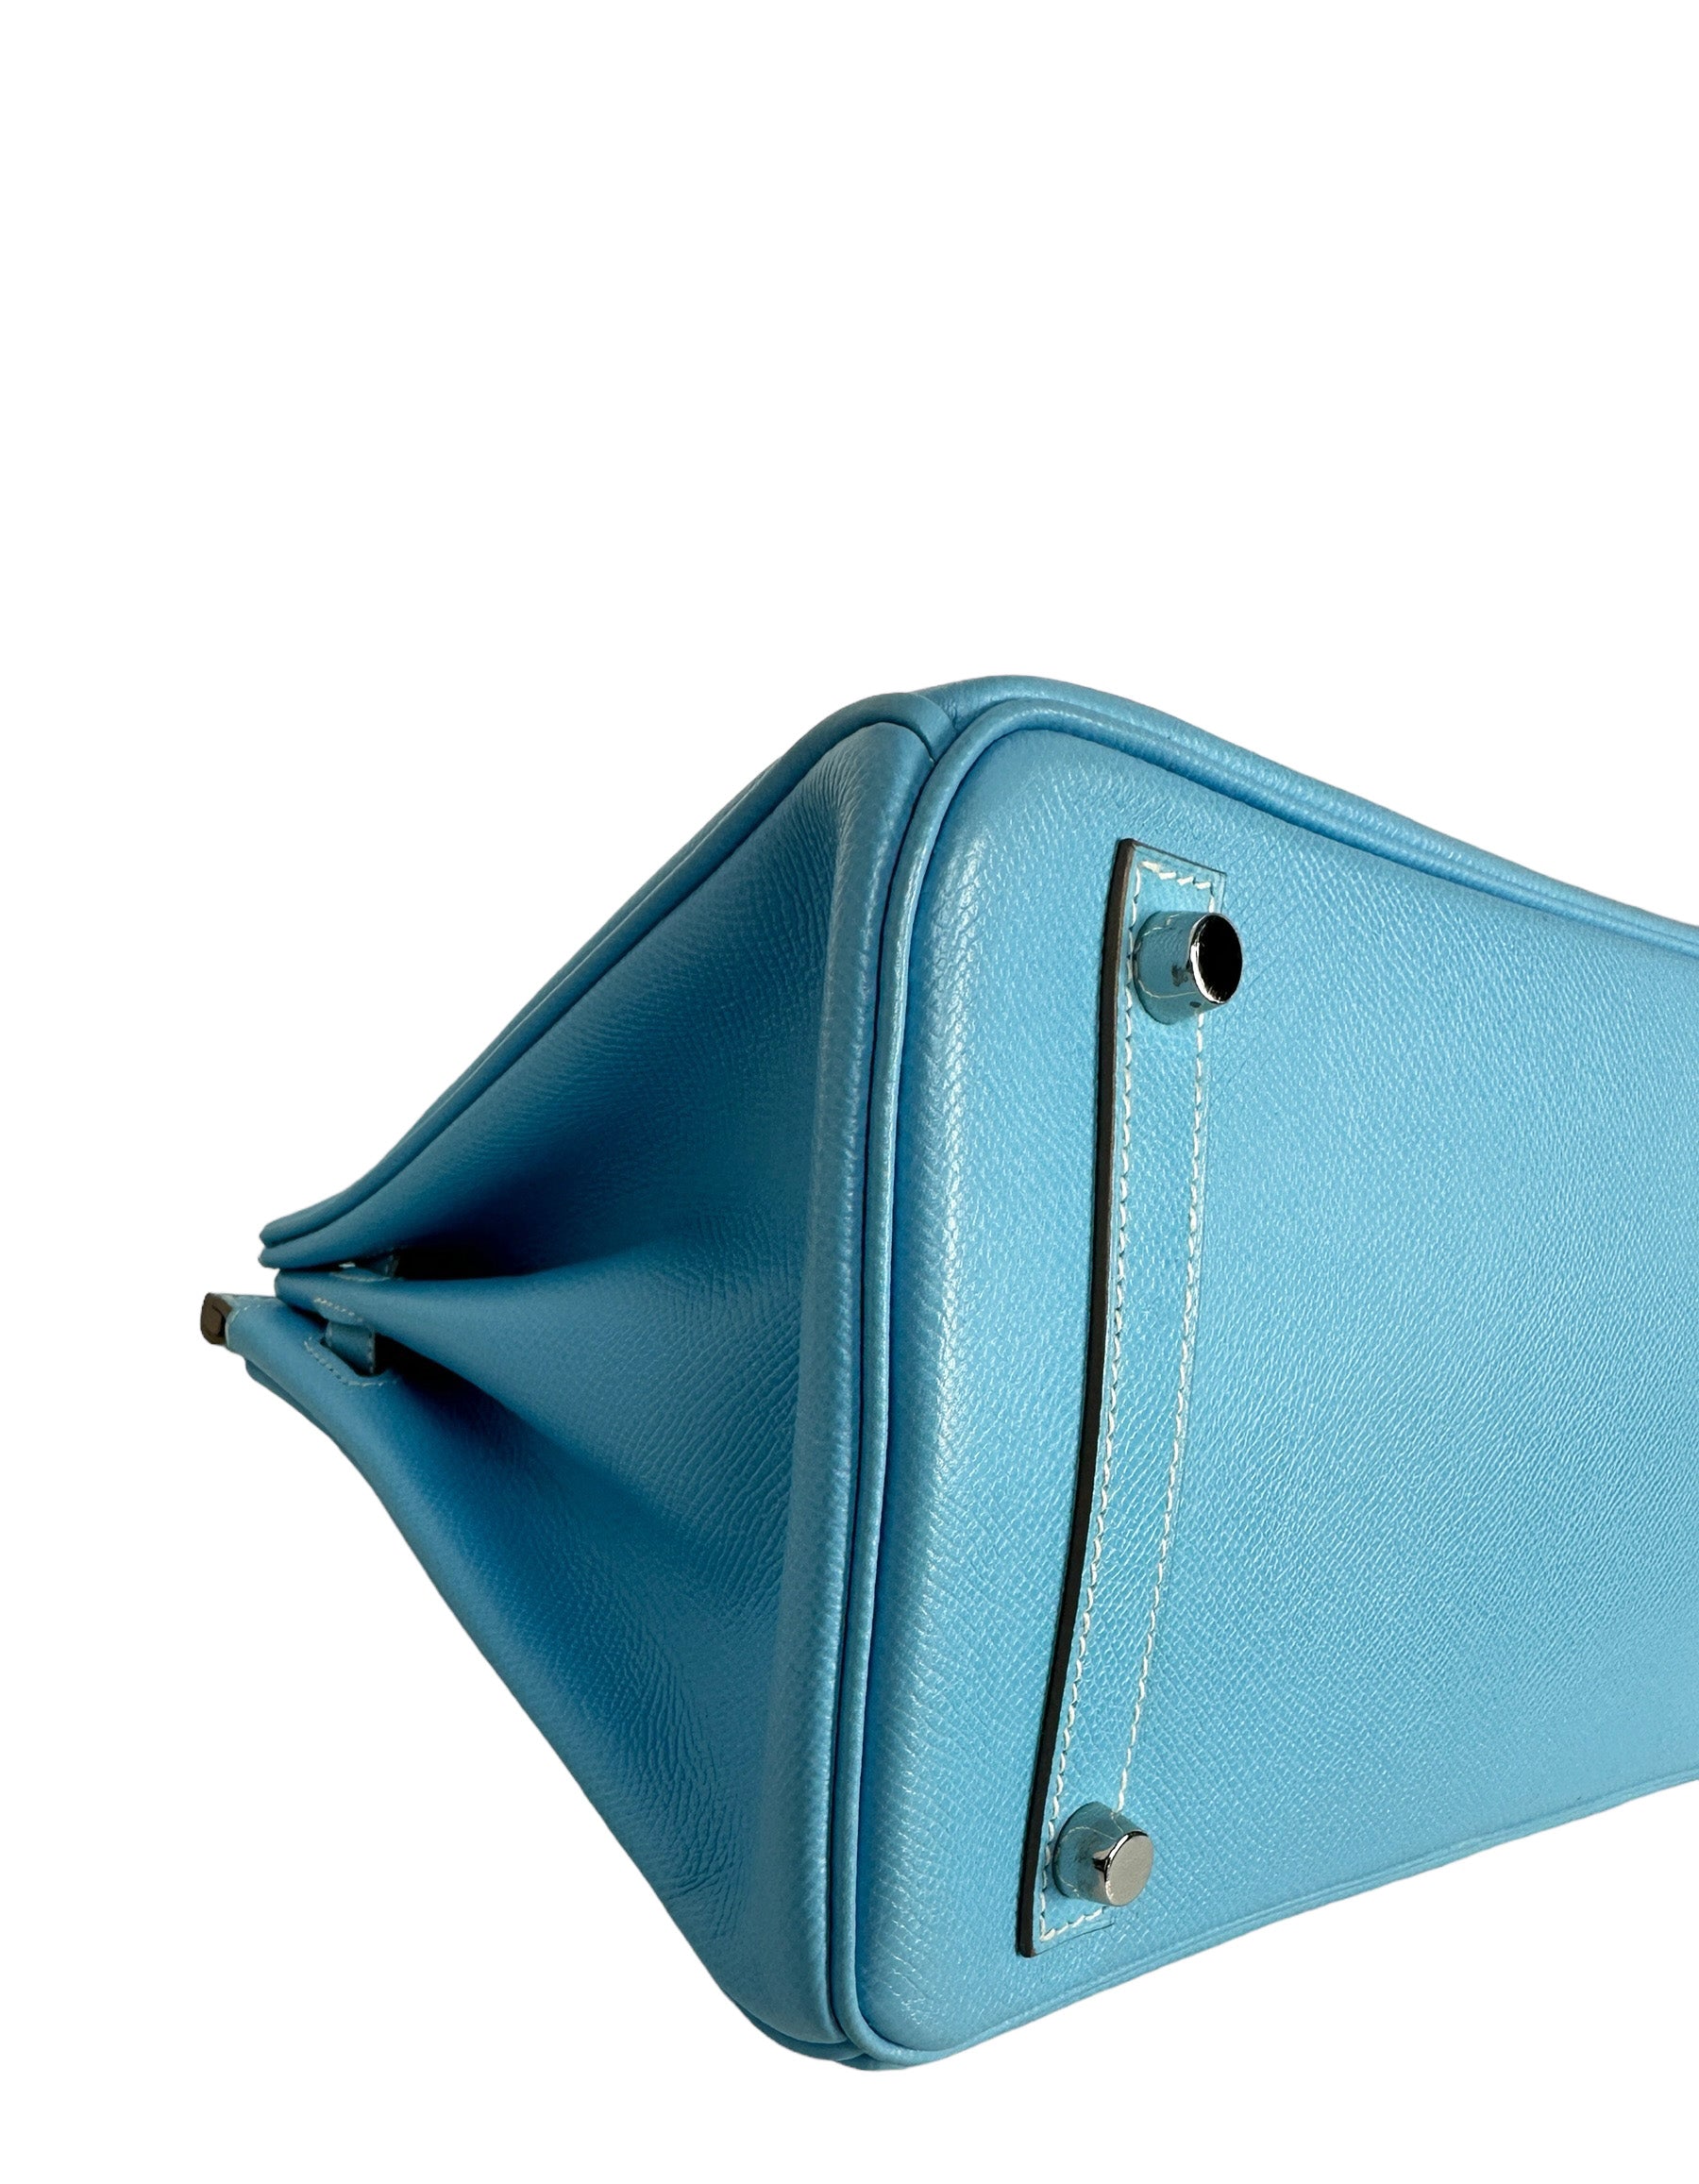 Hermes Blue Celeste/ Mykonos Epsom Leather 30cm Candy Birkin Bag PHW